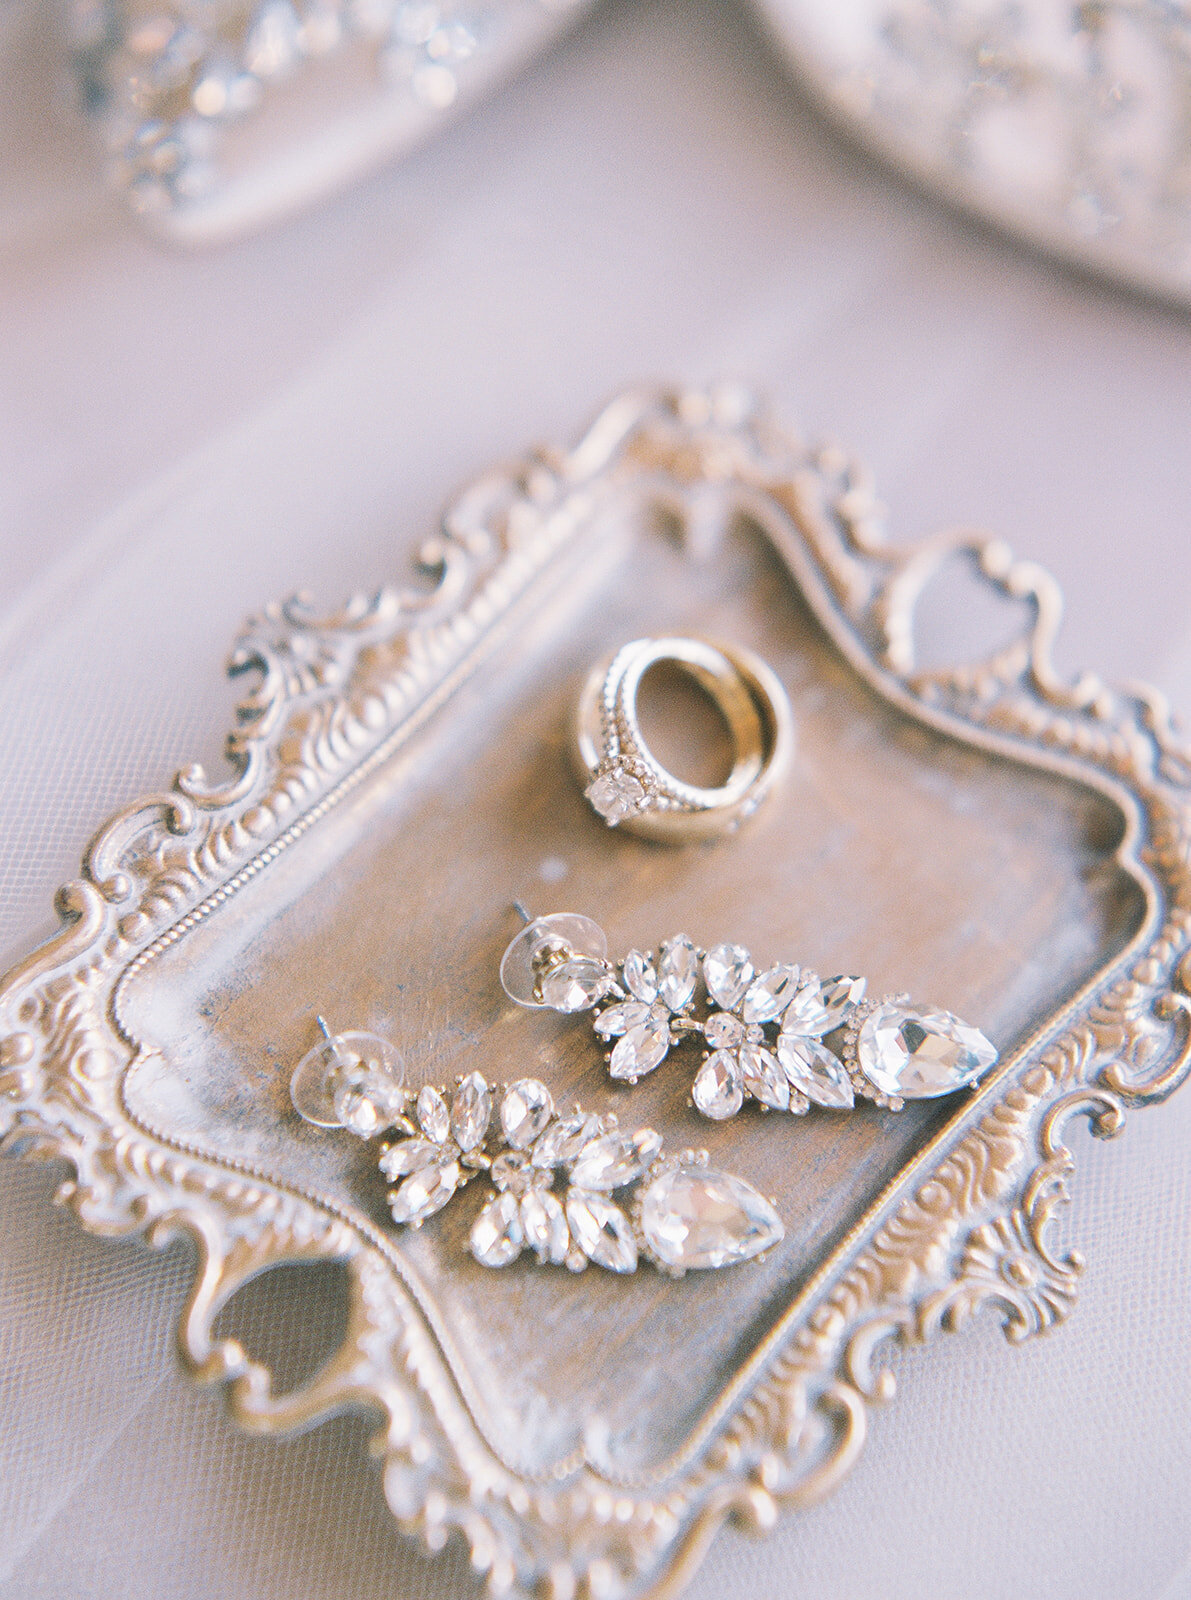 silver wedding jewelry on a silver tray